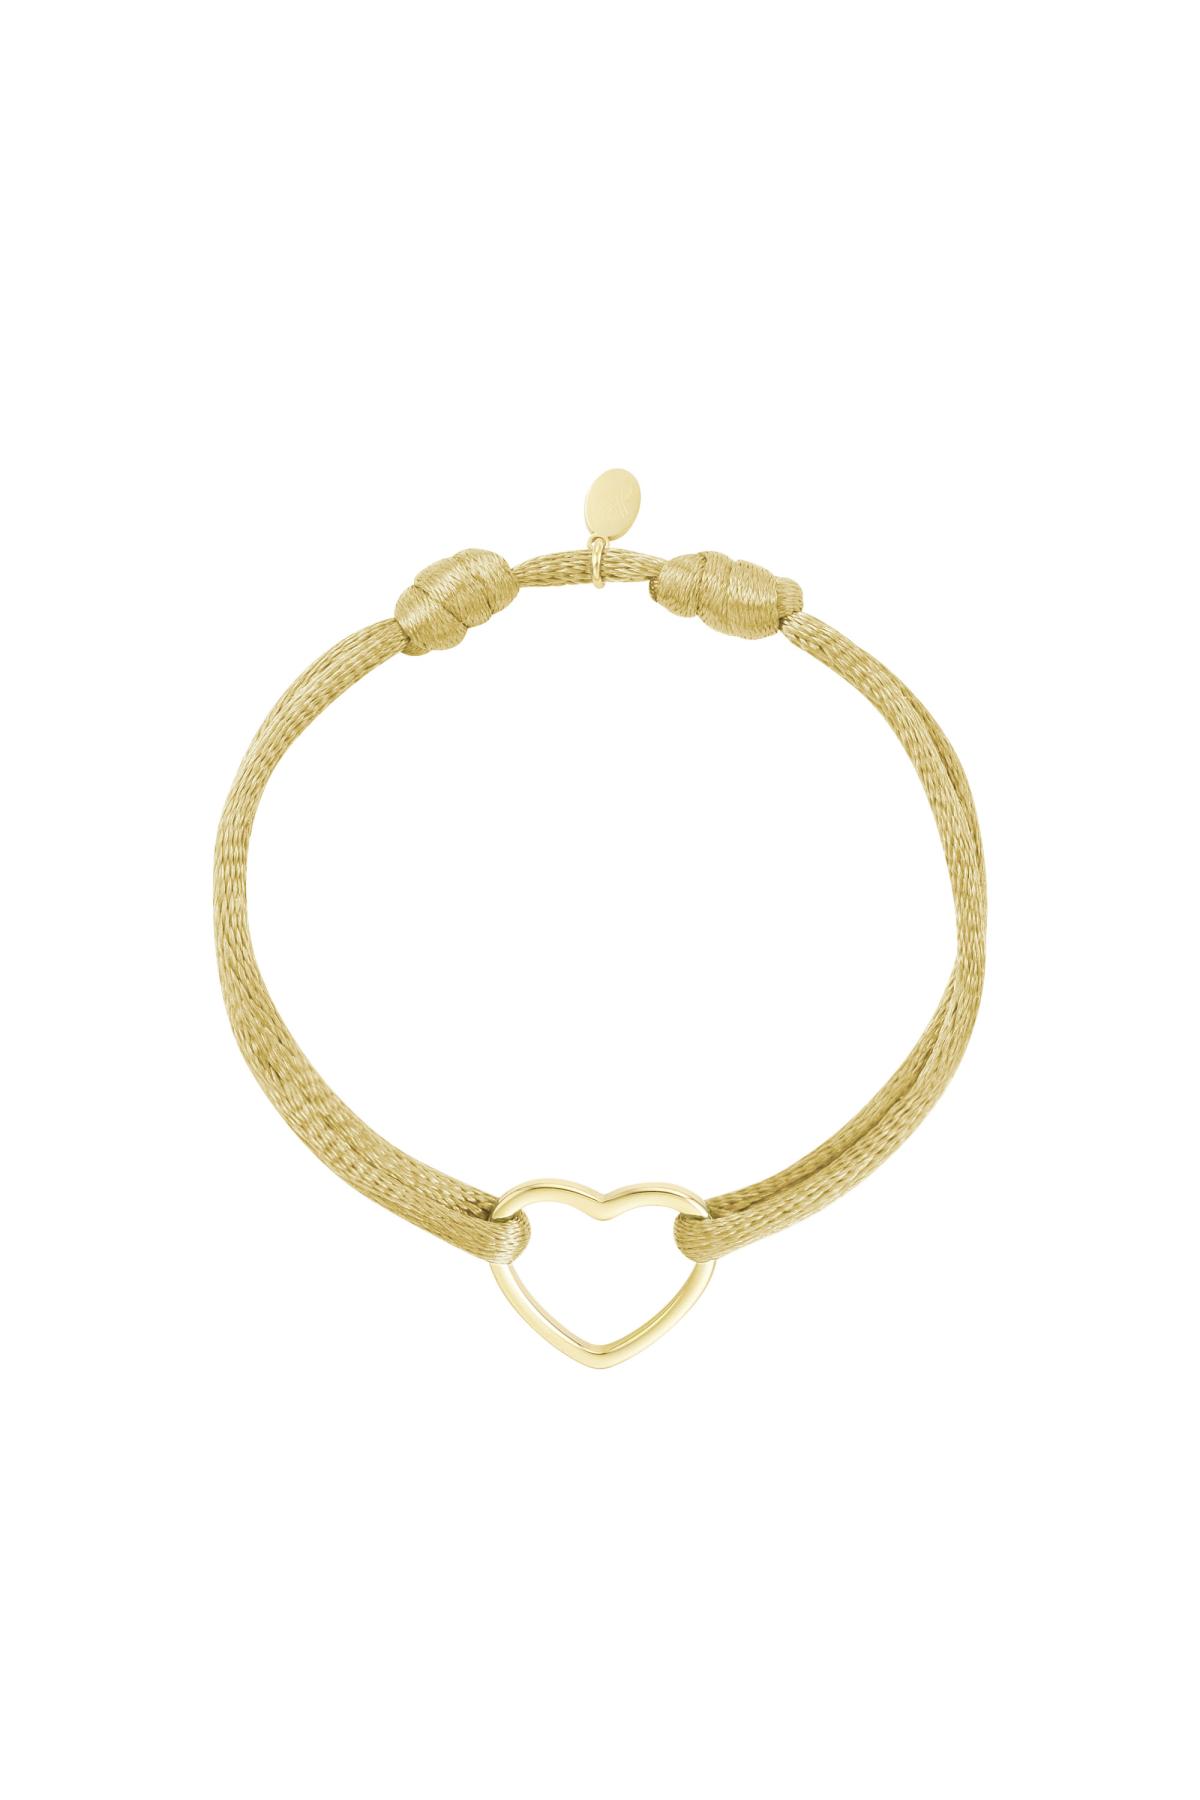 Fabric bracelet heart Beige & Gold Stainless Steel 